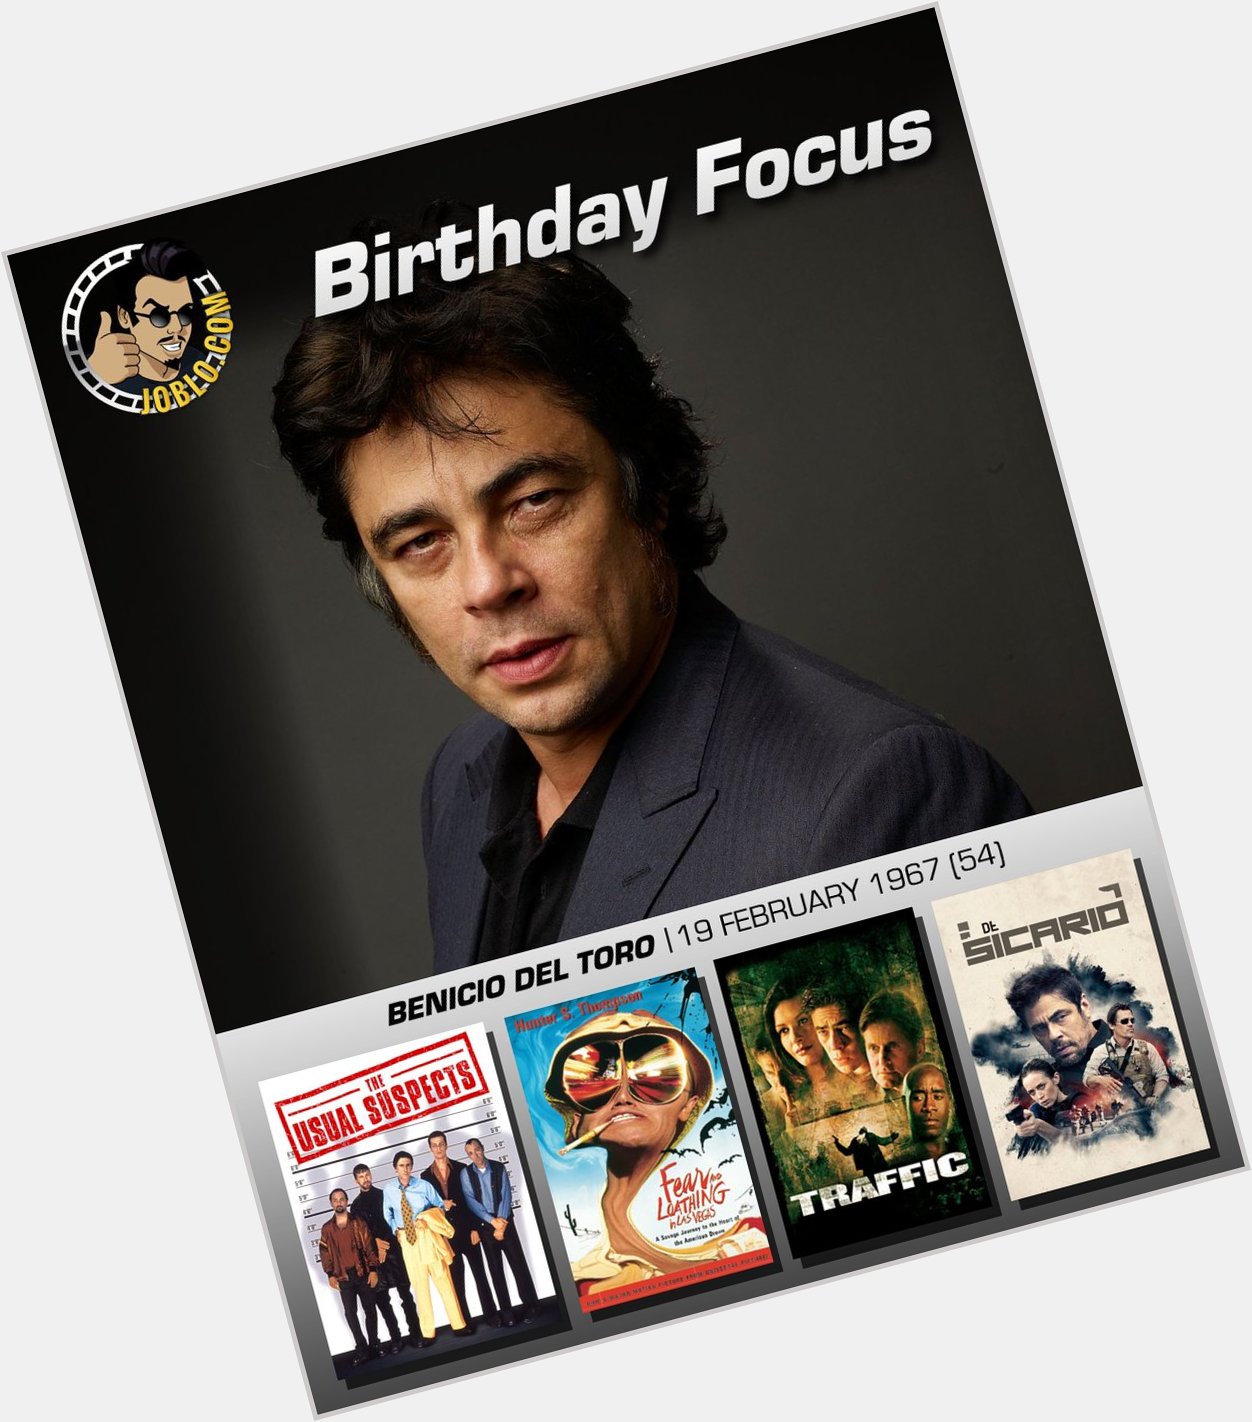 Wishing a very happy 54th birthday to Benicio Del Toro! 